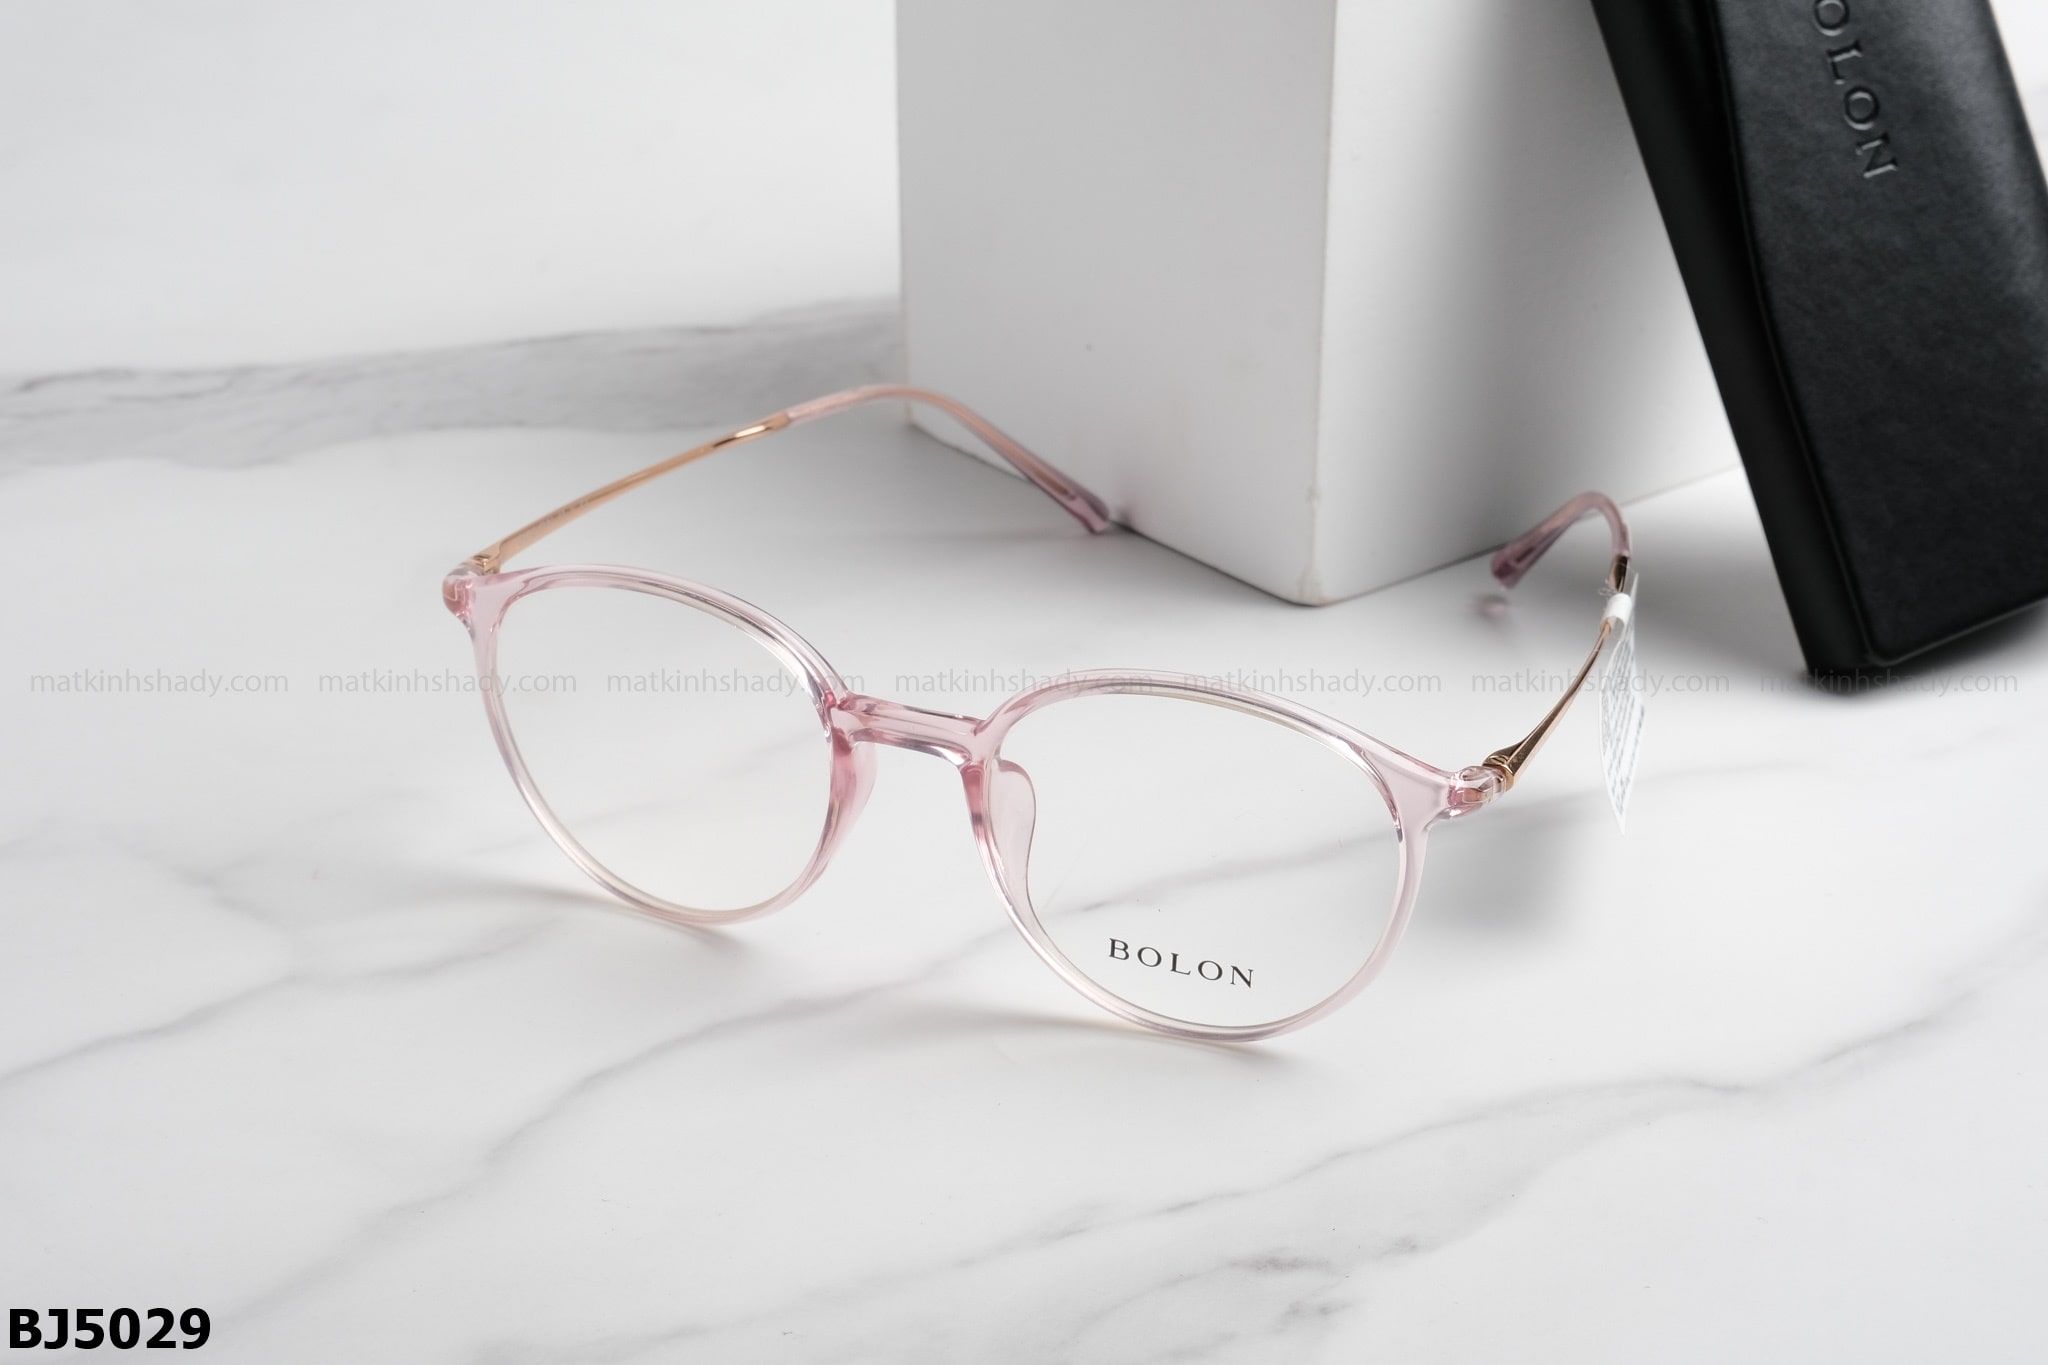  Bolon Eyewear - Glasses - BJ5029 